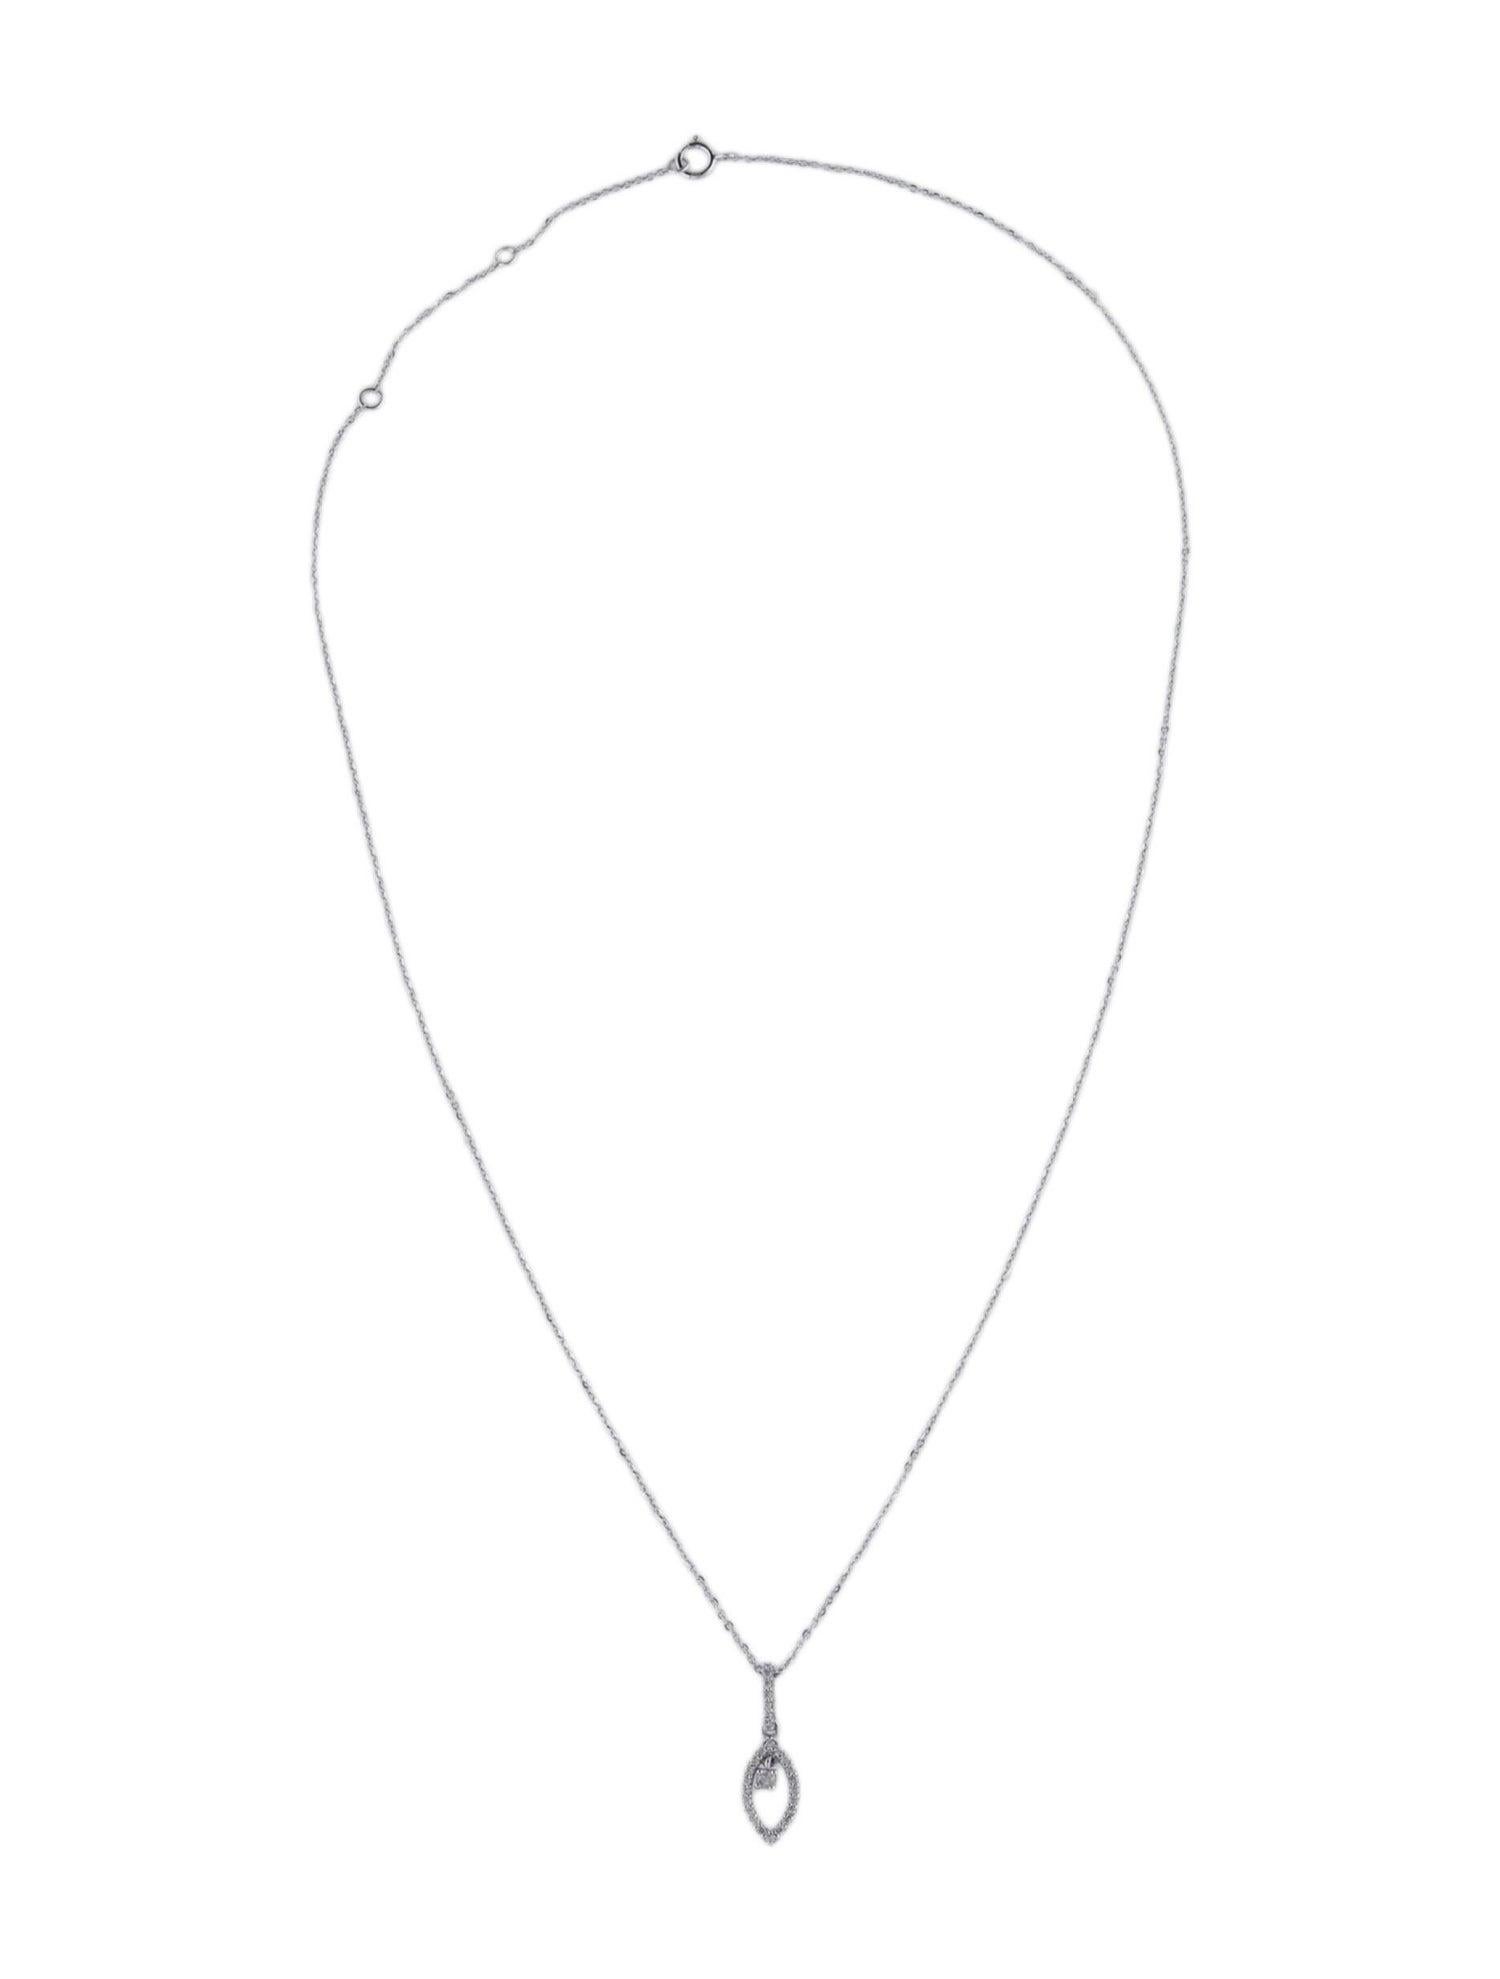 Brilliant Cut 14K Diamond Pendant Necklace - Elegant & Timeless Statement Jewelry Piece For Sale